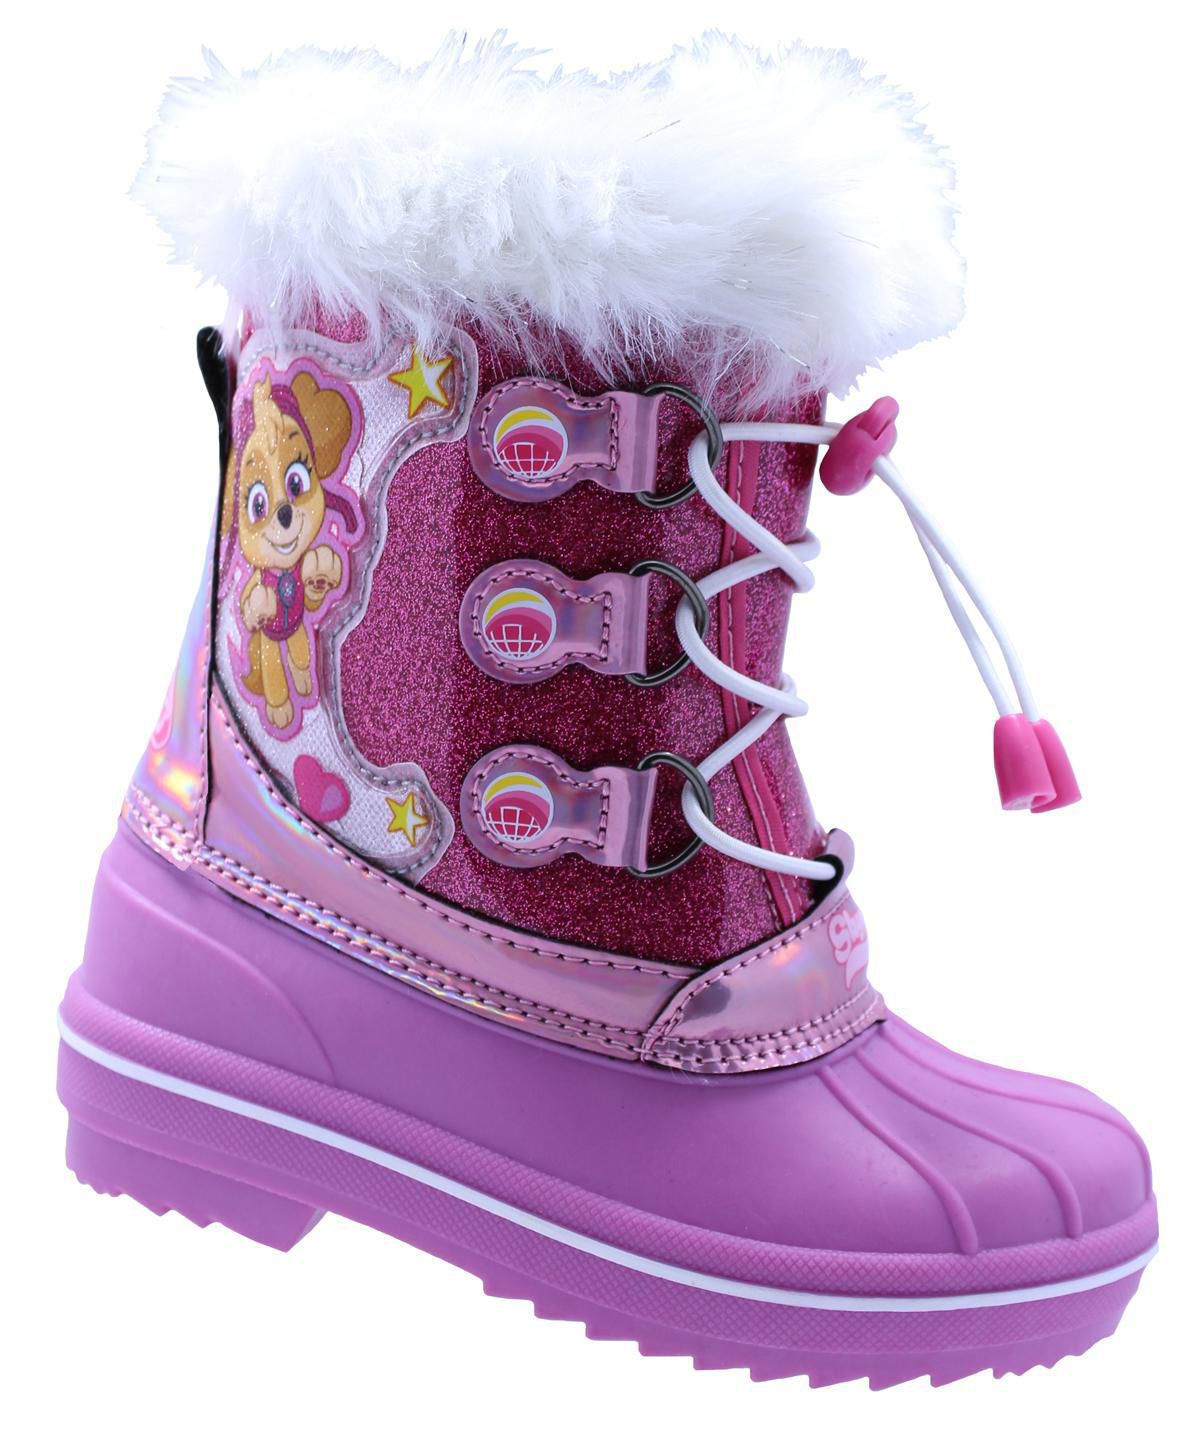 Girls PAW Patrol Purple Glitter Wellies Wellington RAIN Snow Boots UK Size 5-10 